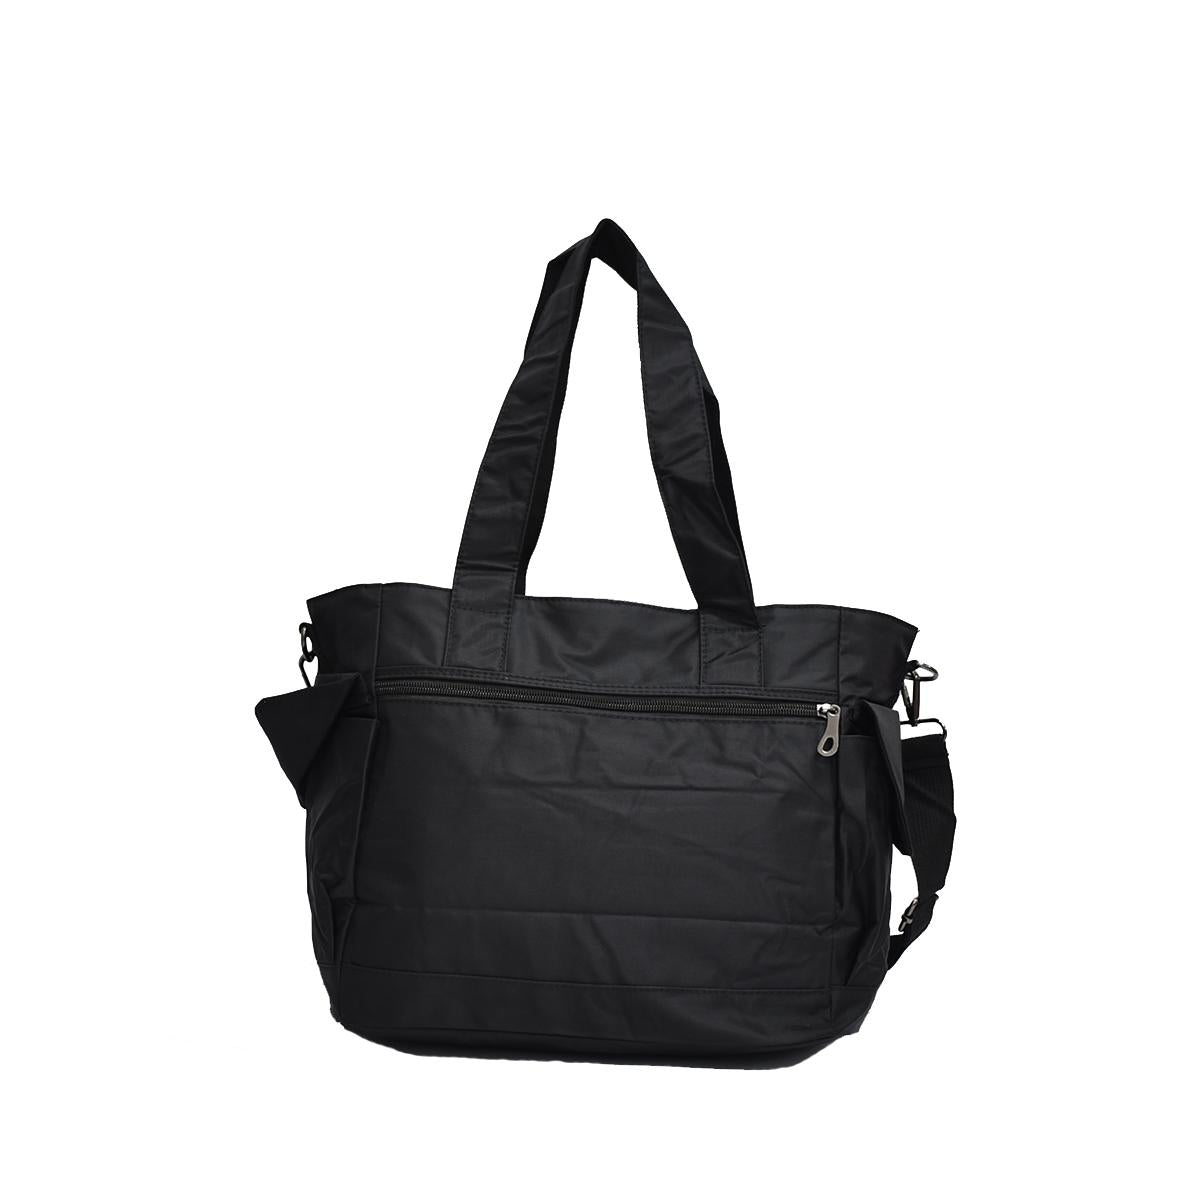 Crisan Bags - Skylar - Handbag-Crisan bags